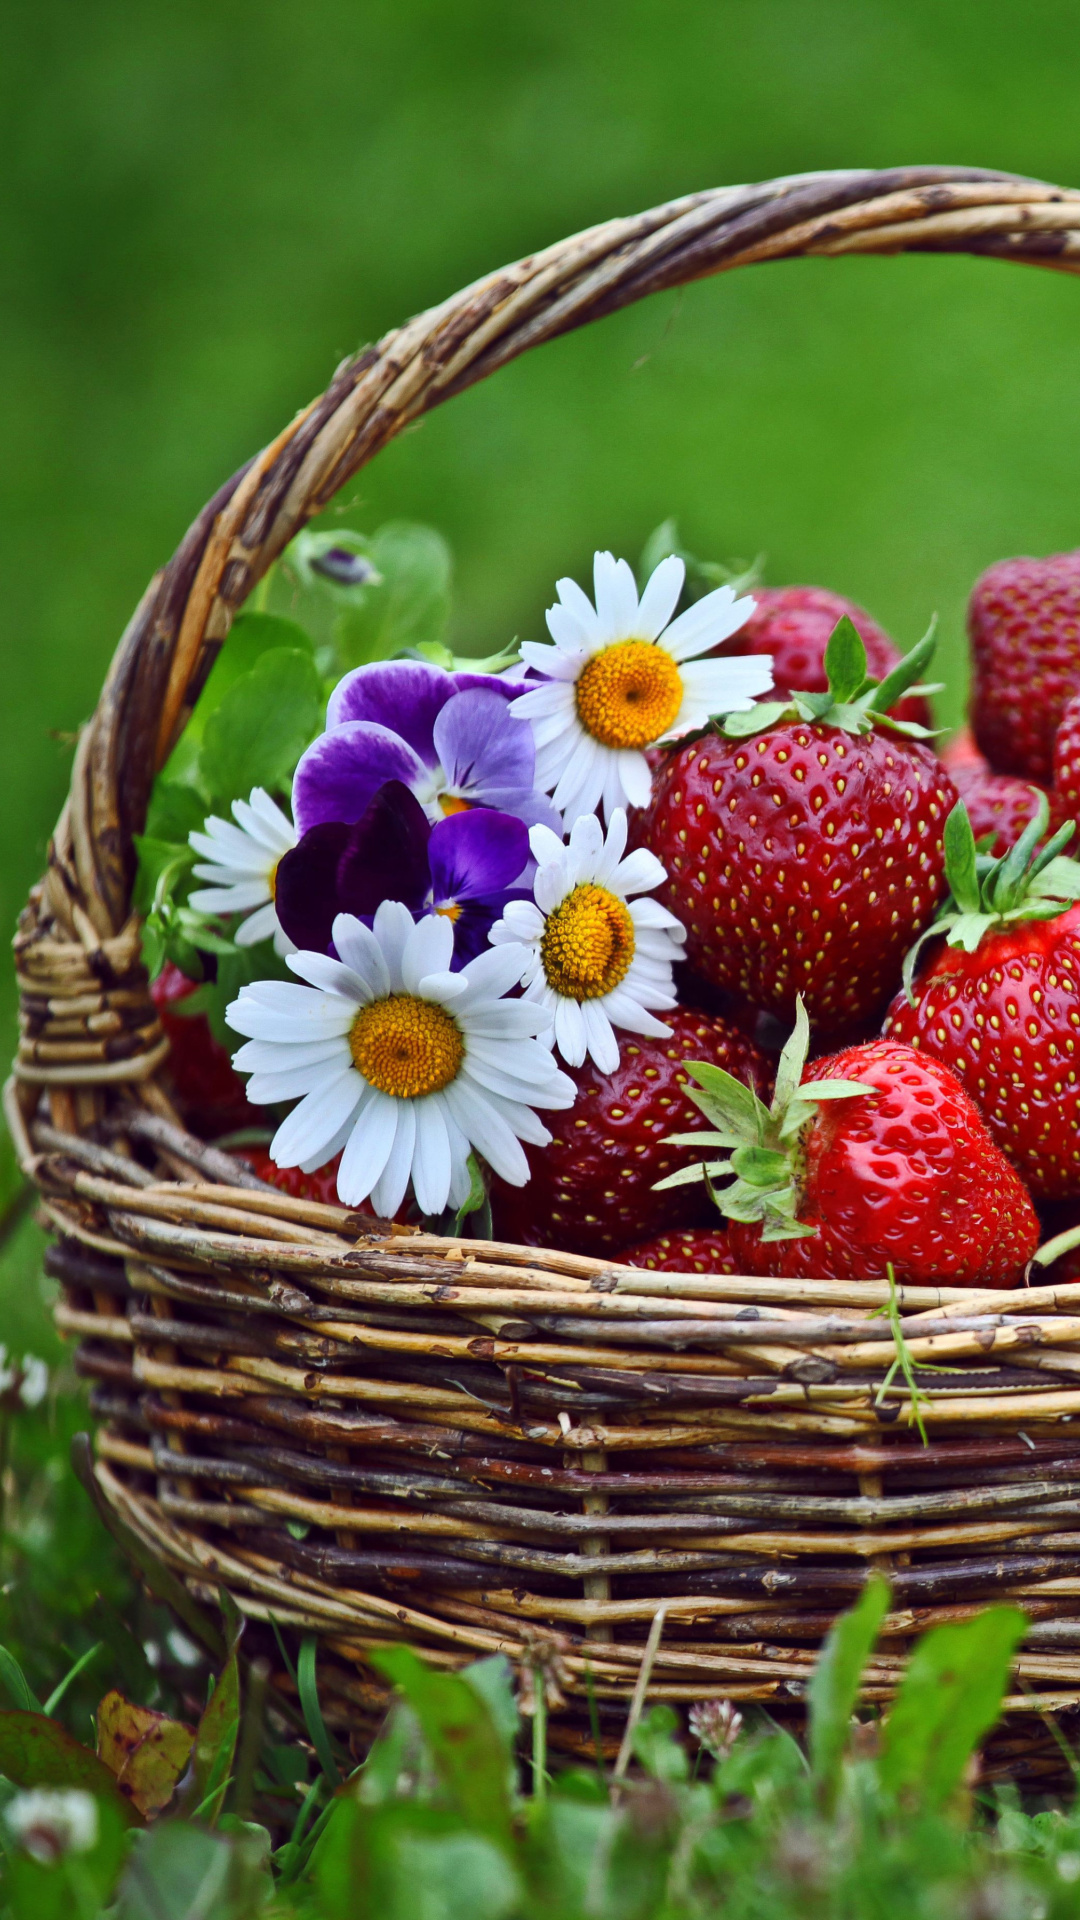 Strawberries in Baskets wallpaper 1080x1920